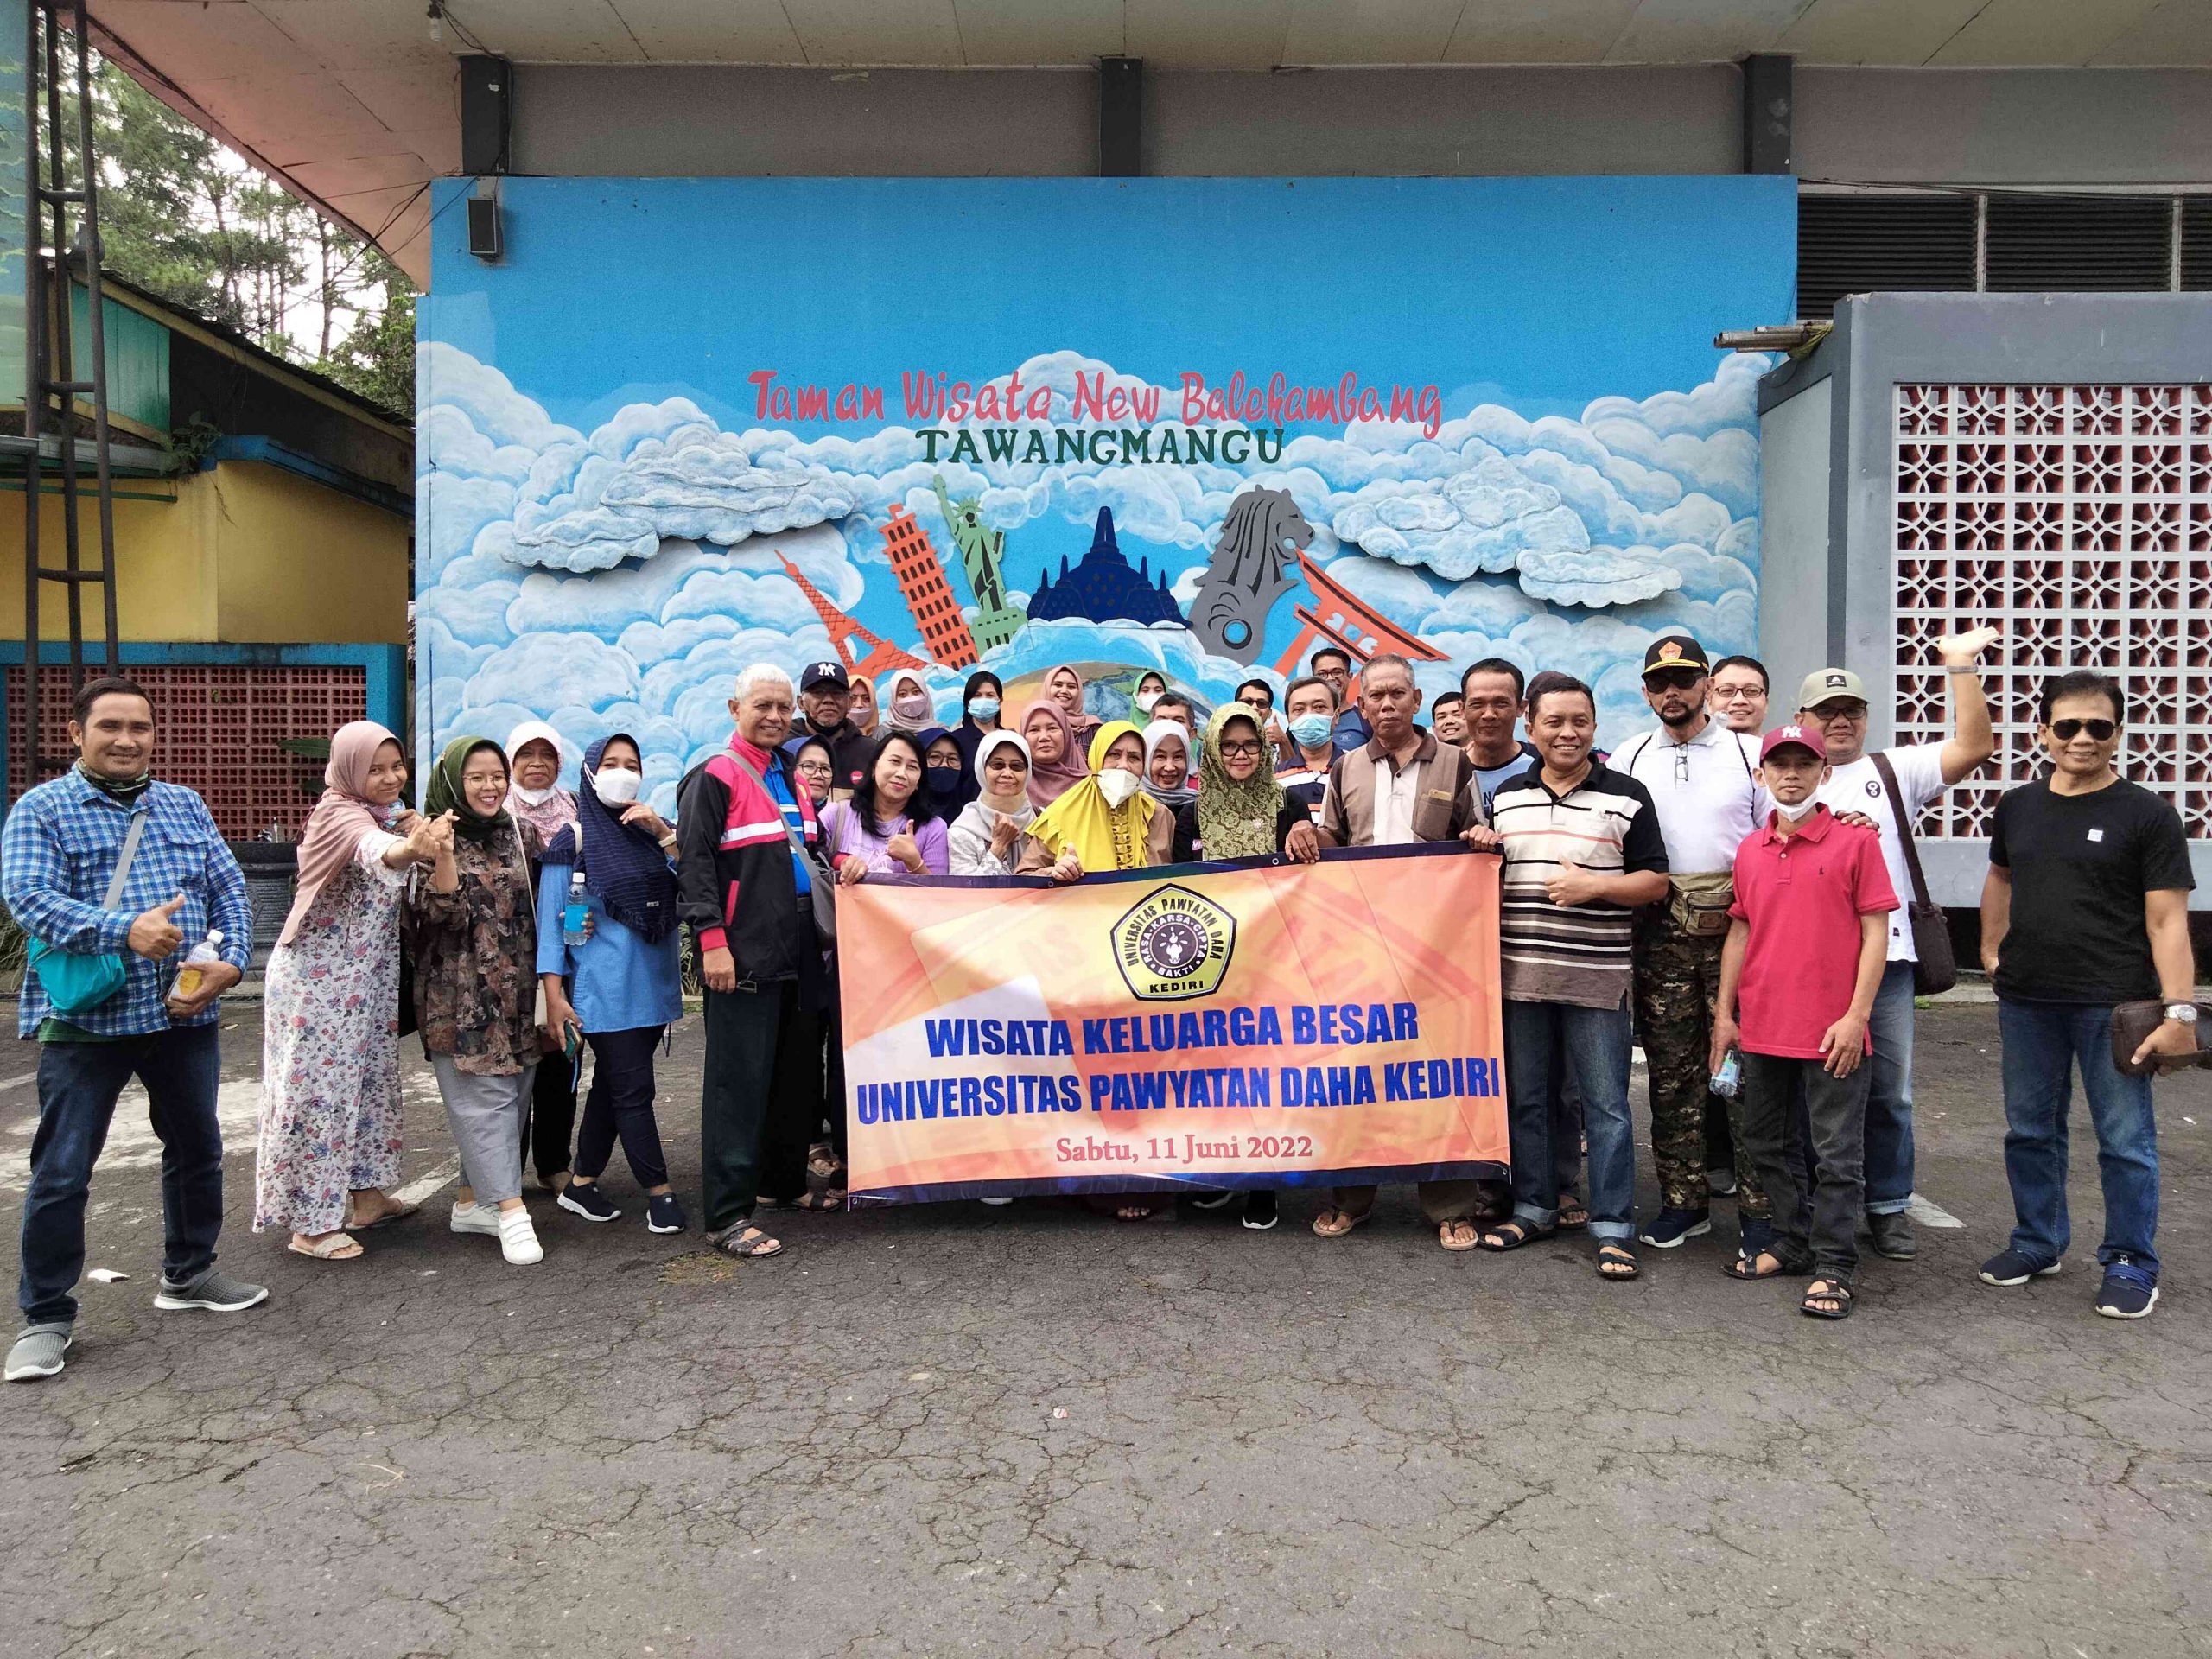 Keluarga Besar Universitas Pawyatan Daha Berwisata ke Tawangmangu